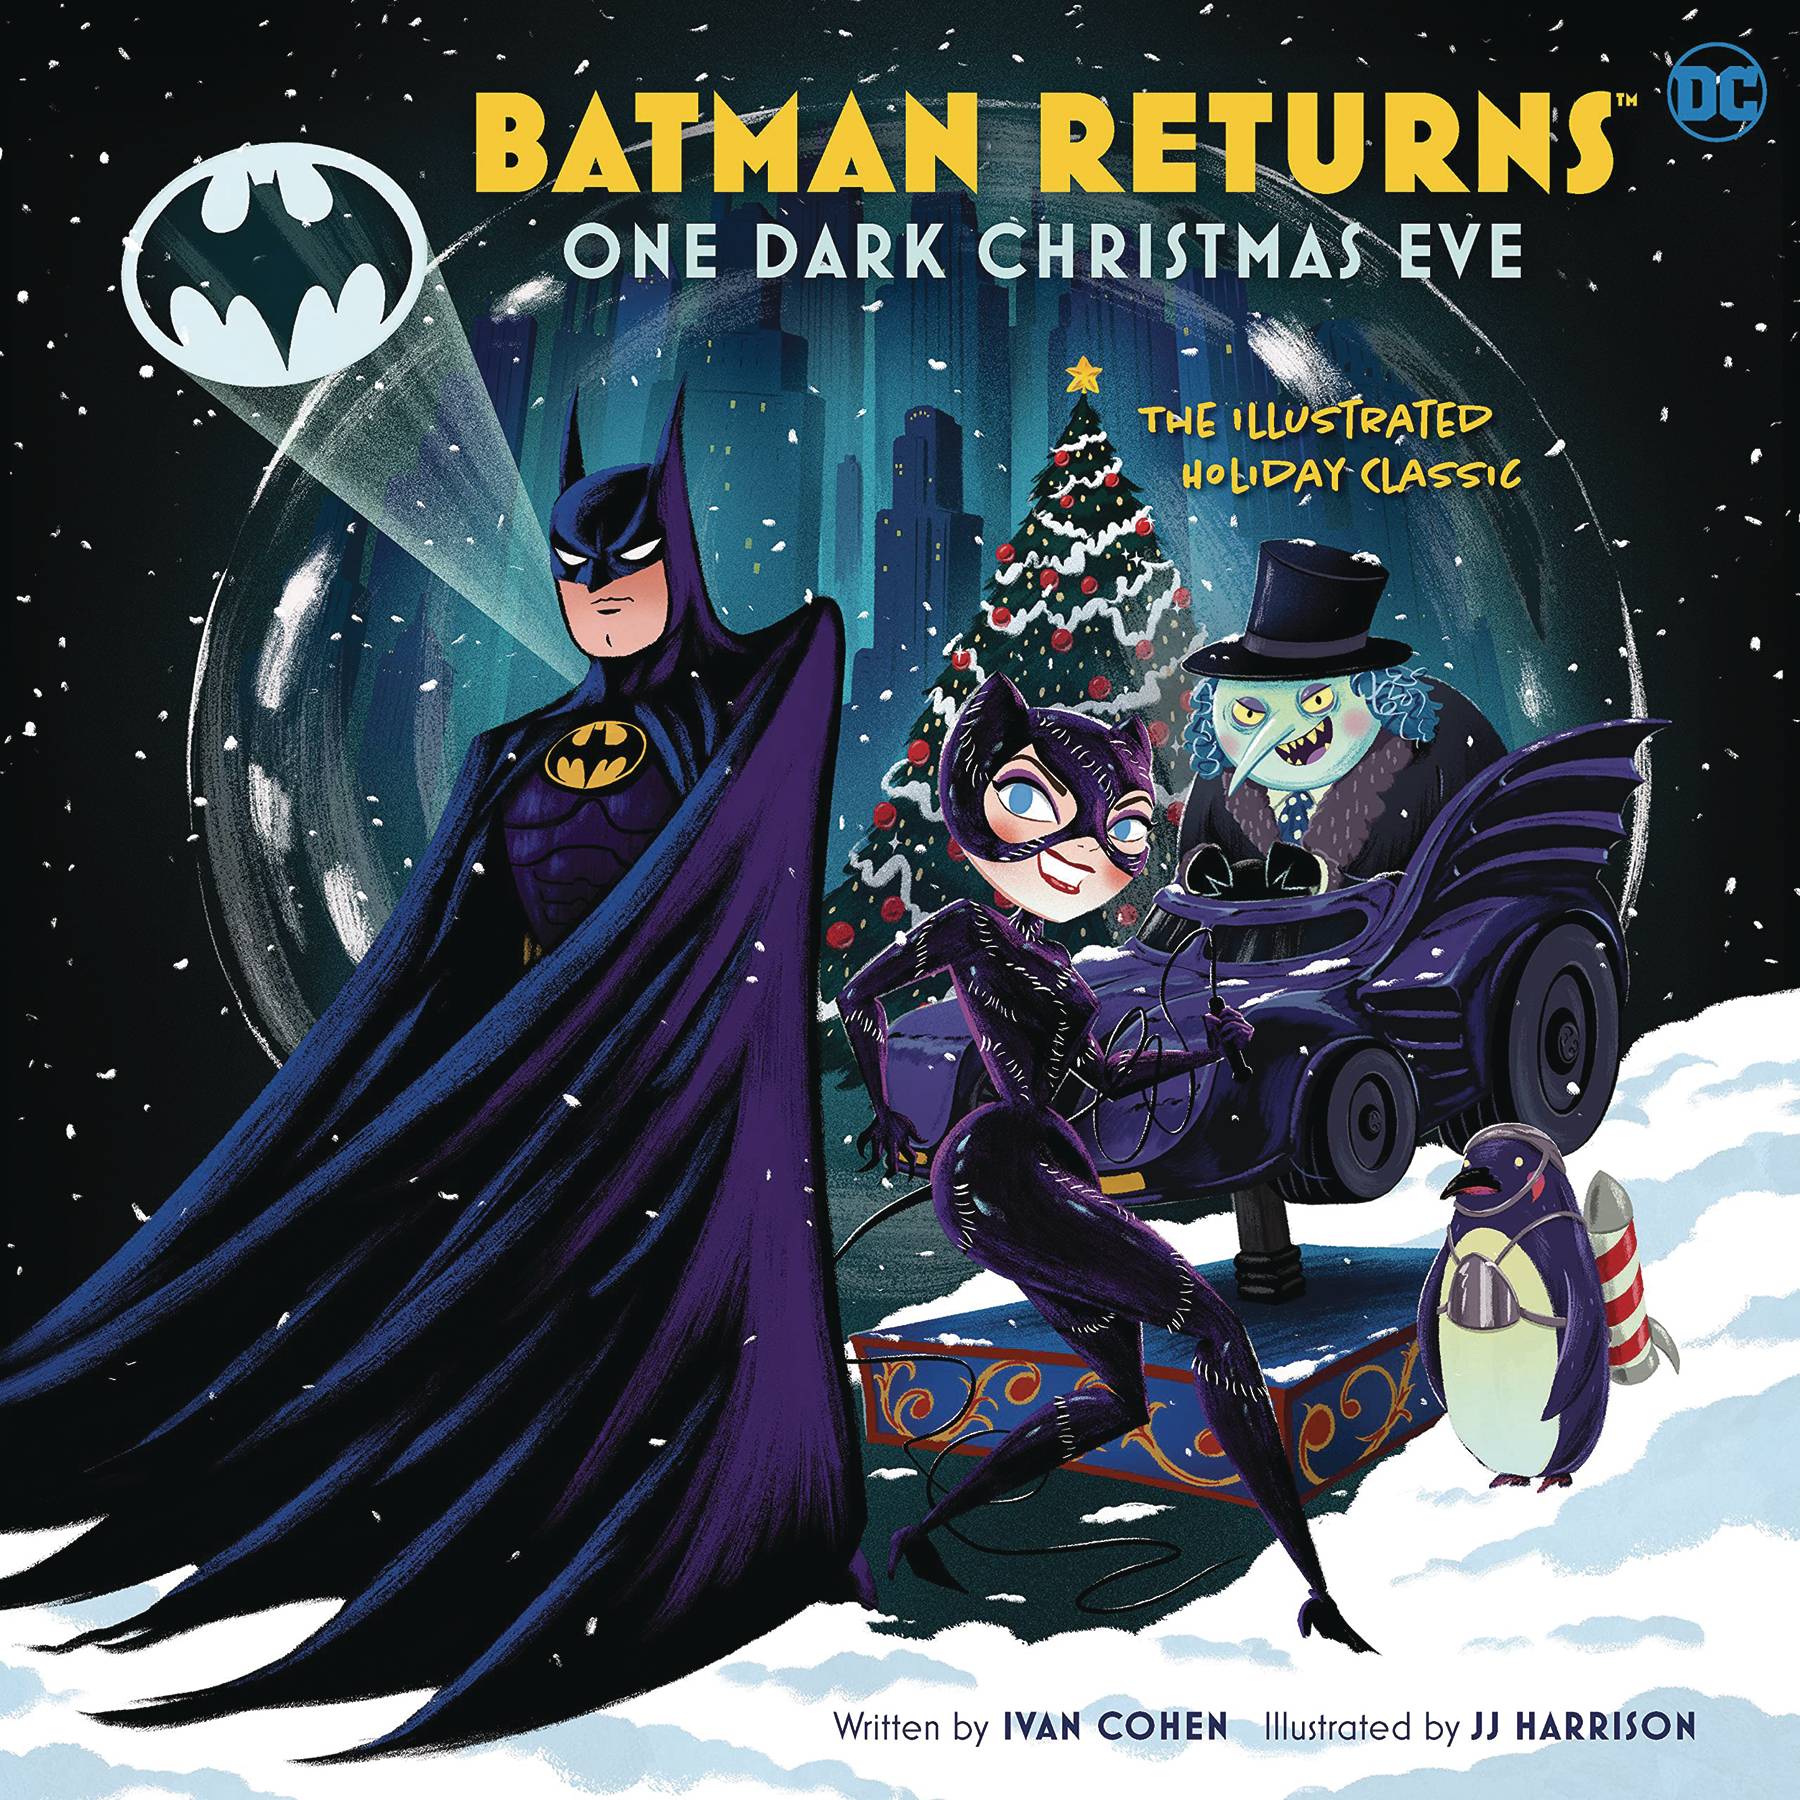 BATMAN RETURNS ONE DARK CHRISTMAS EVE ILLUS HOLIDAY